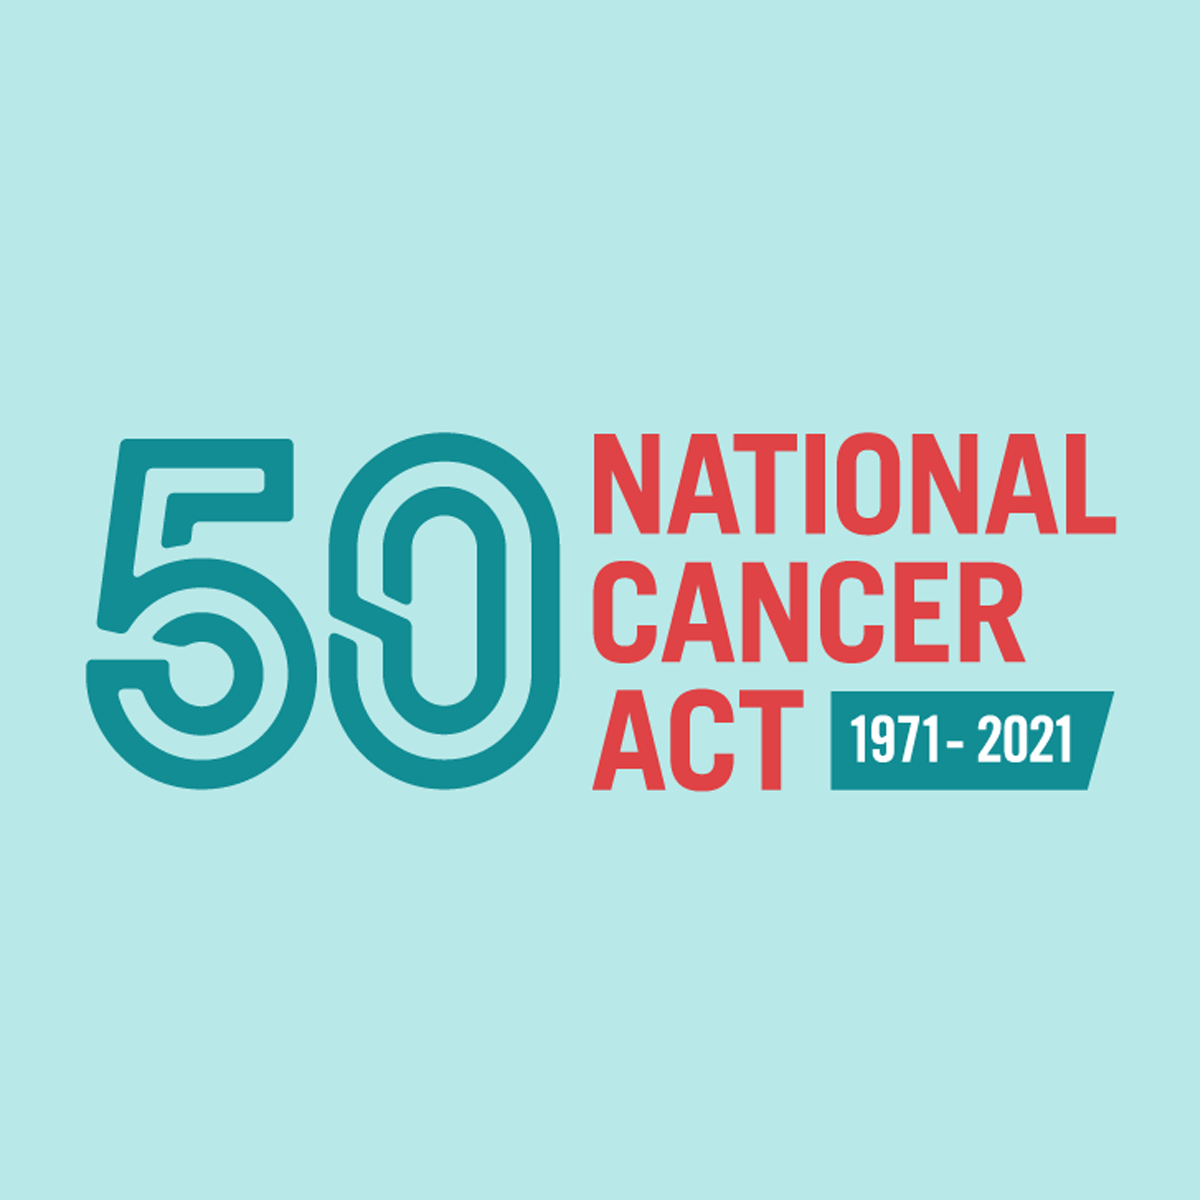 National Cancer Act at 50 - 1971-2021